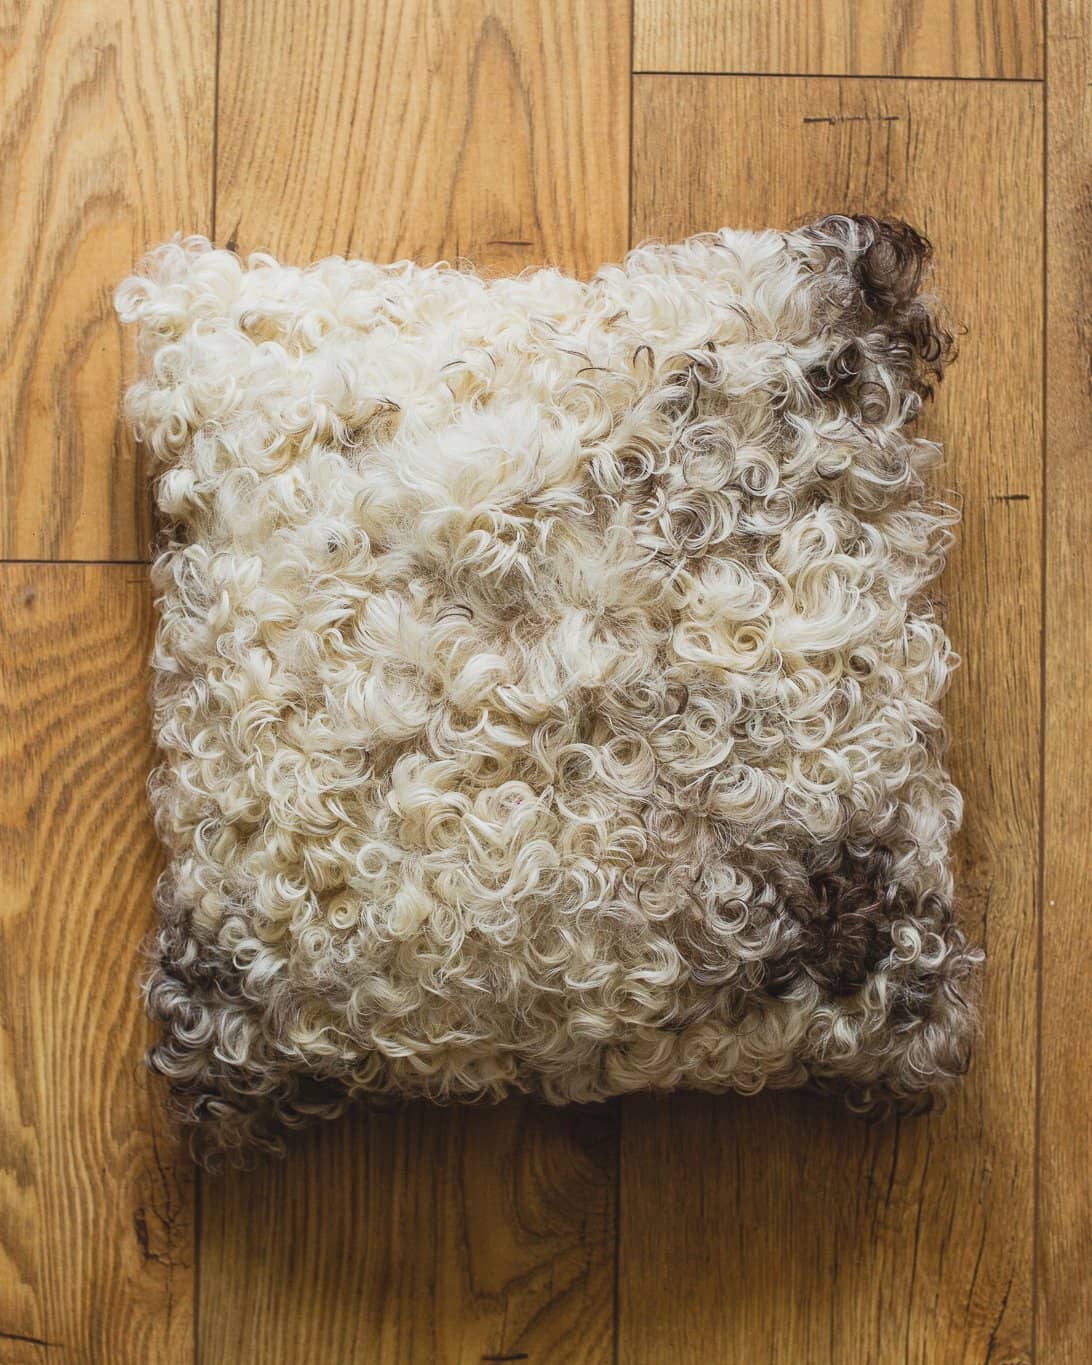 Nordvek Spanish Sheepskin Cushion 9016-100 Dark On Wooden Floor